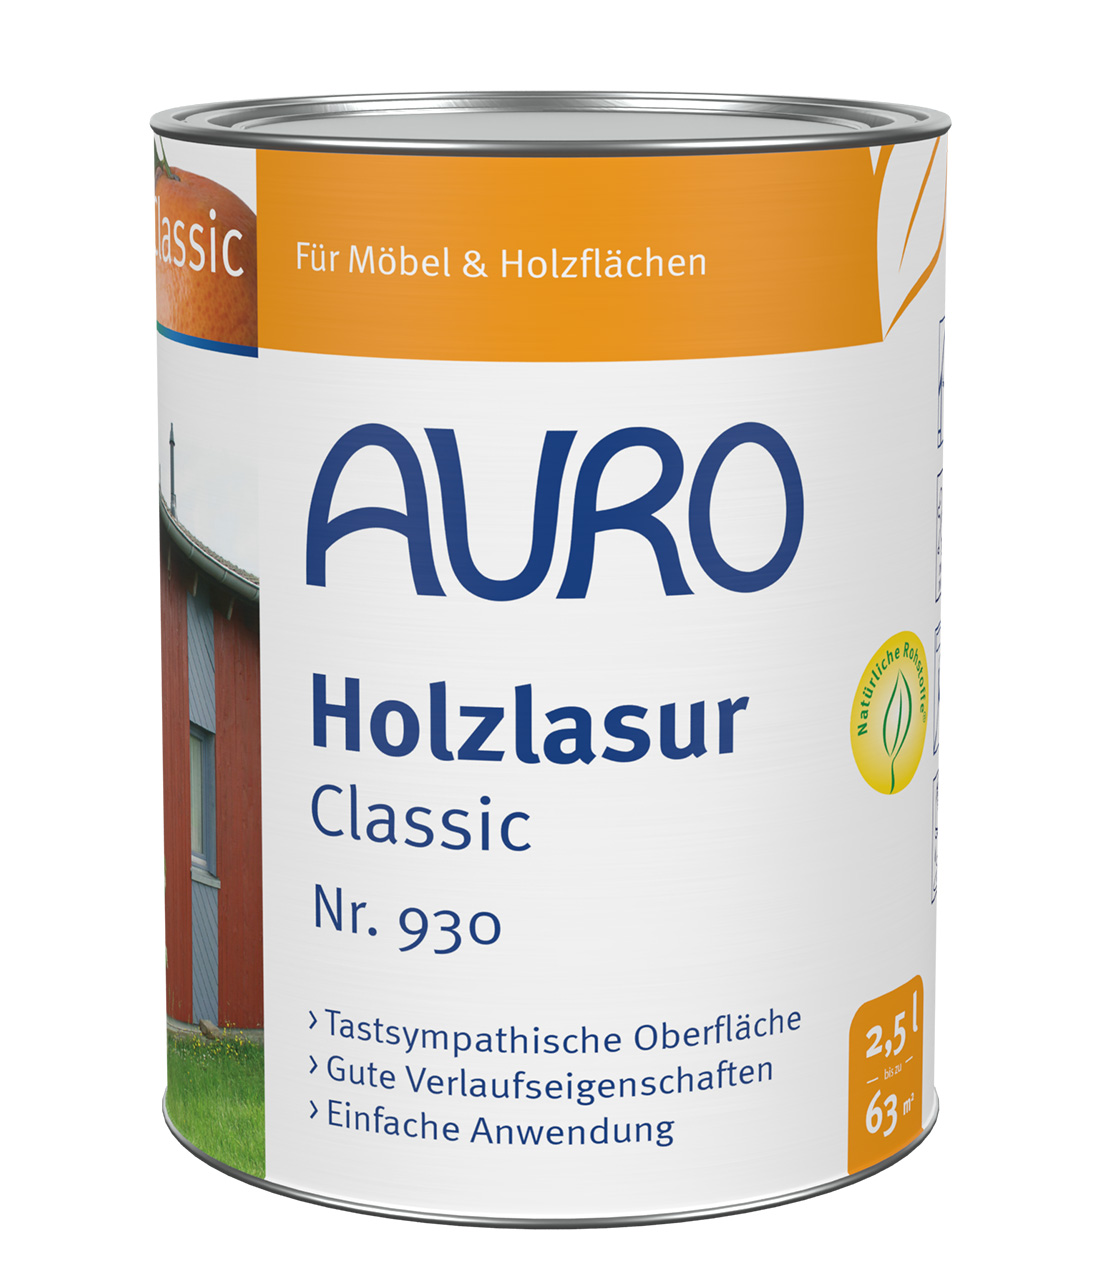 AURO Holzlasur Classic Nr. 930